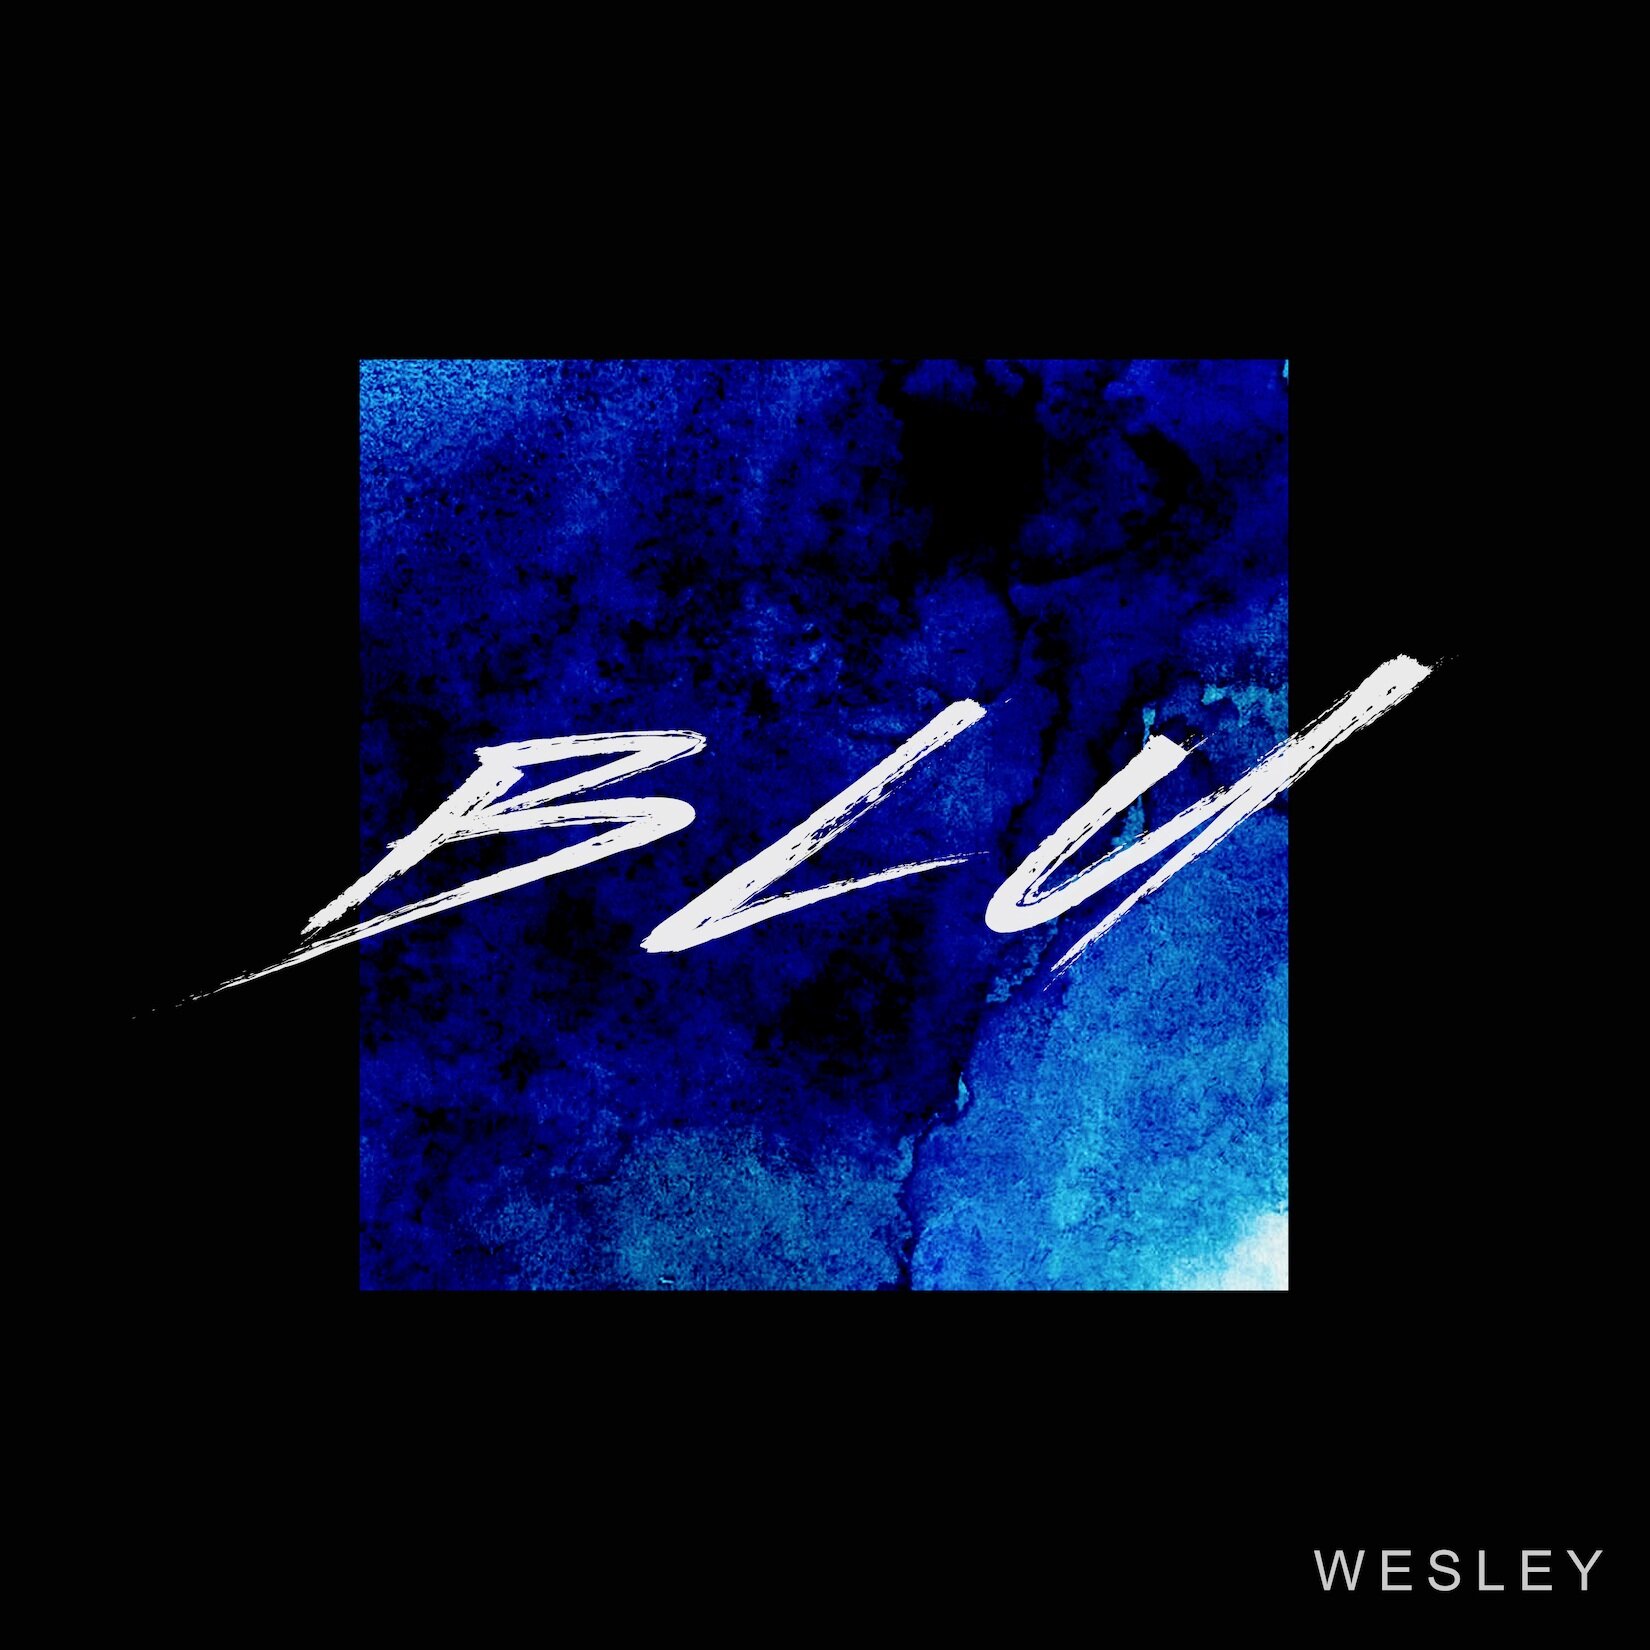 blu_wesley-finalartwork copy.png